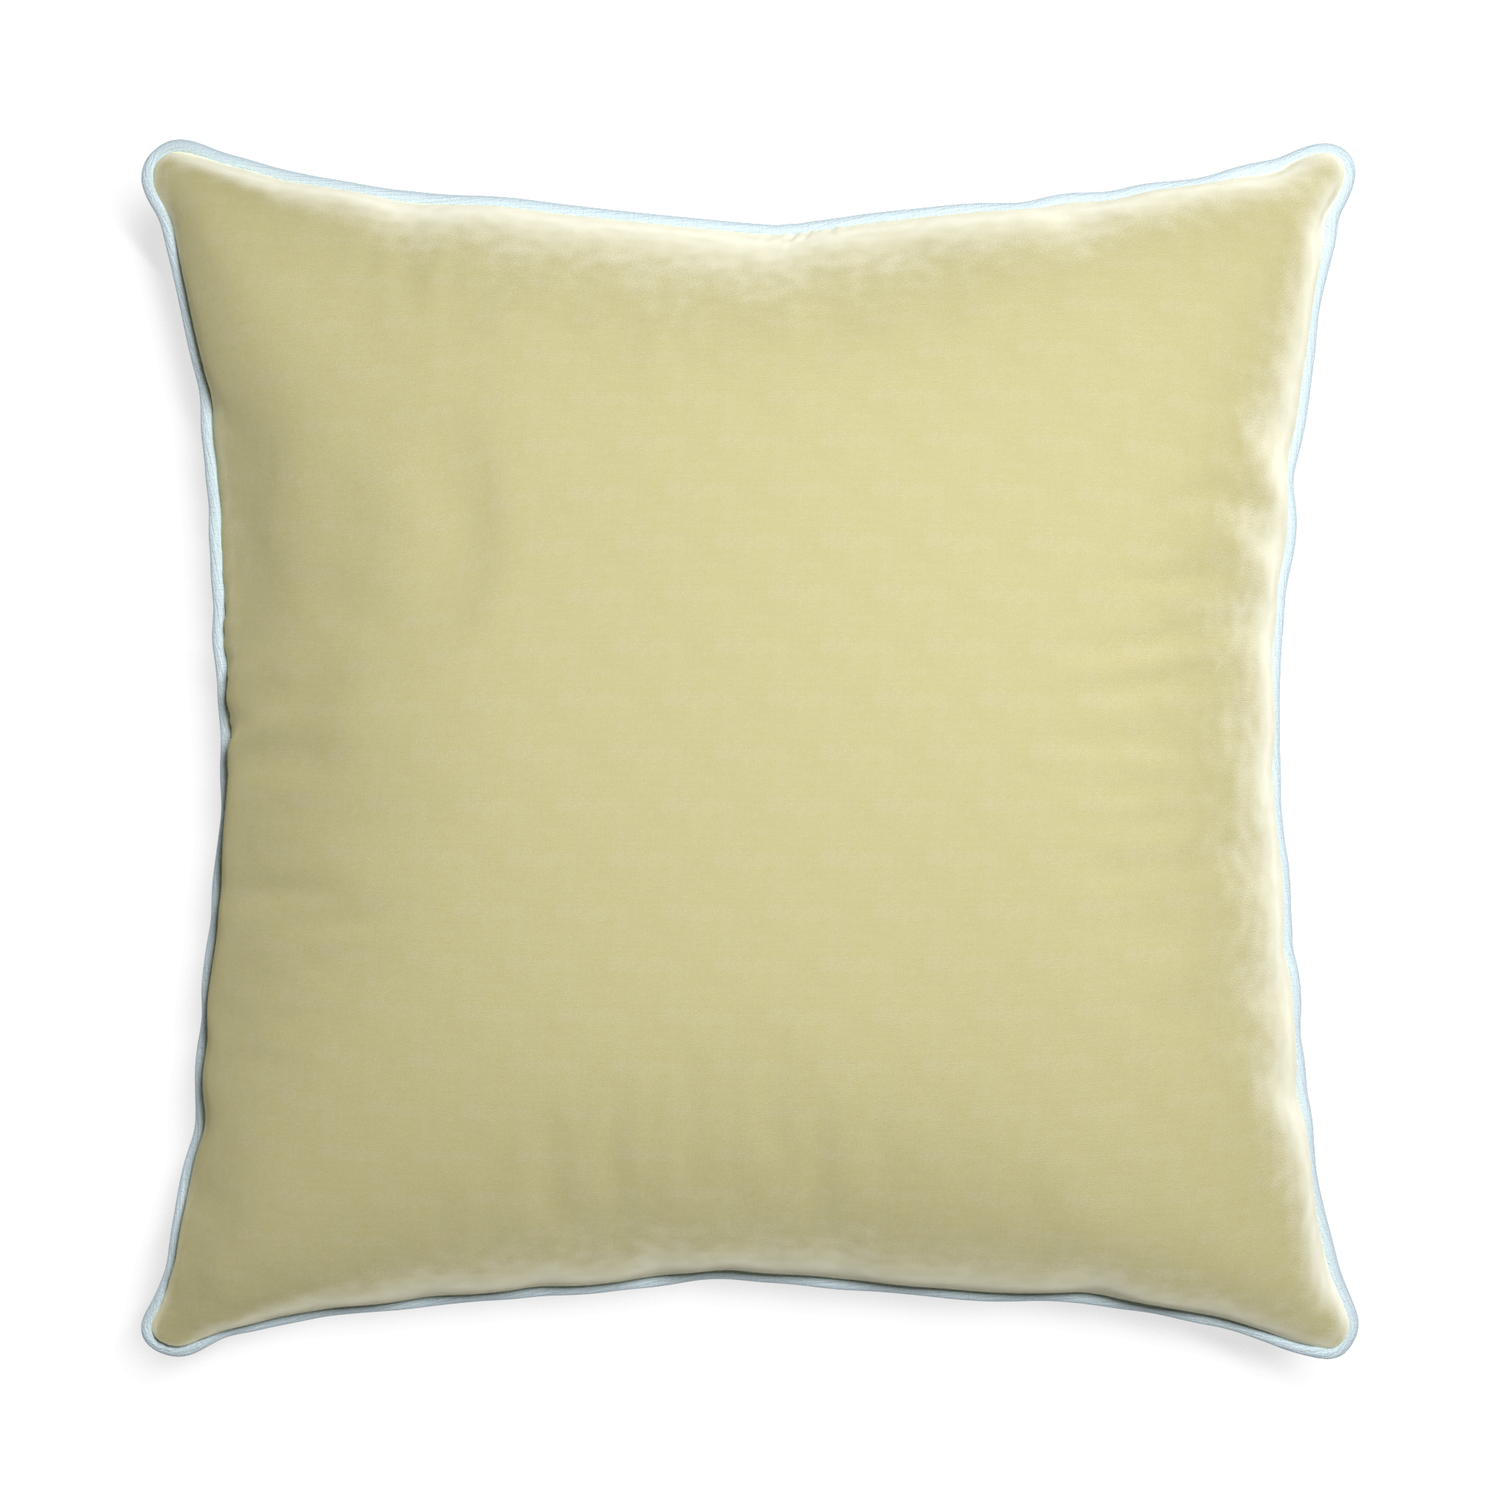 Euro-sham pear velvet custom pillow with powder piping on white background